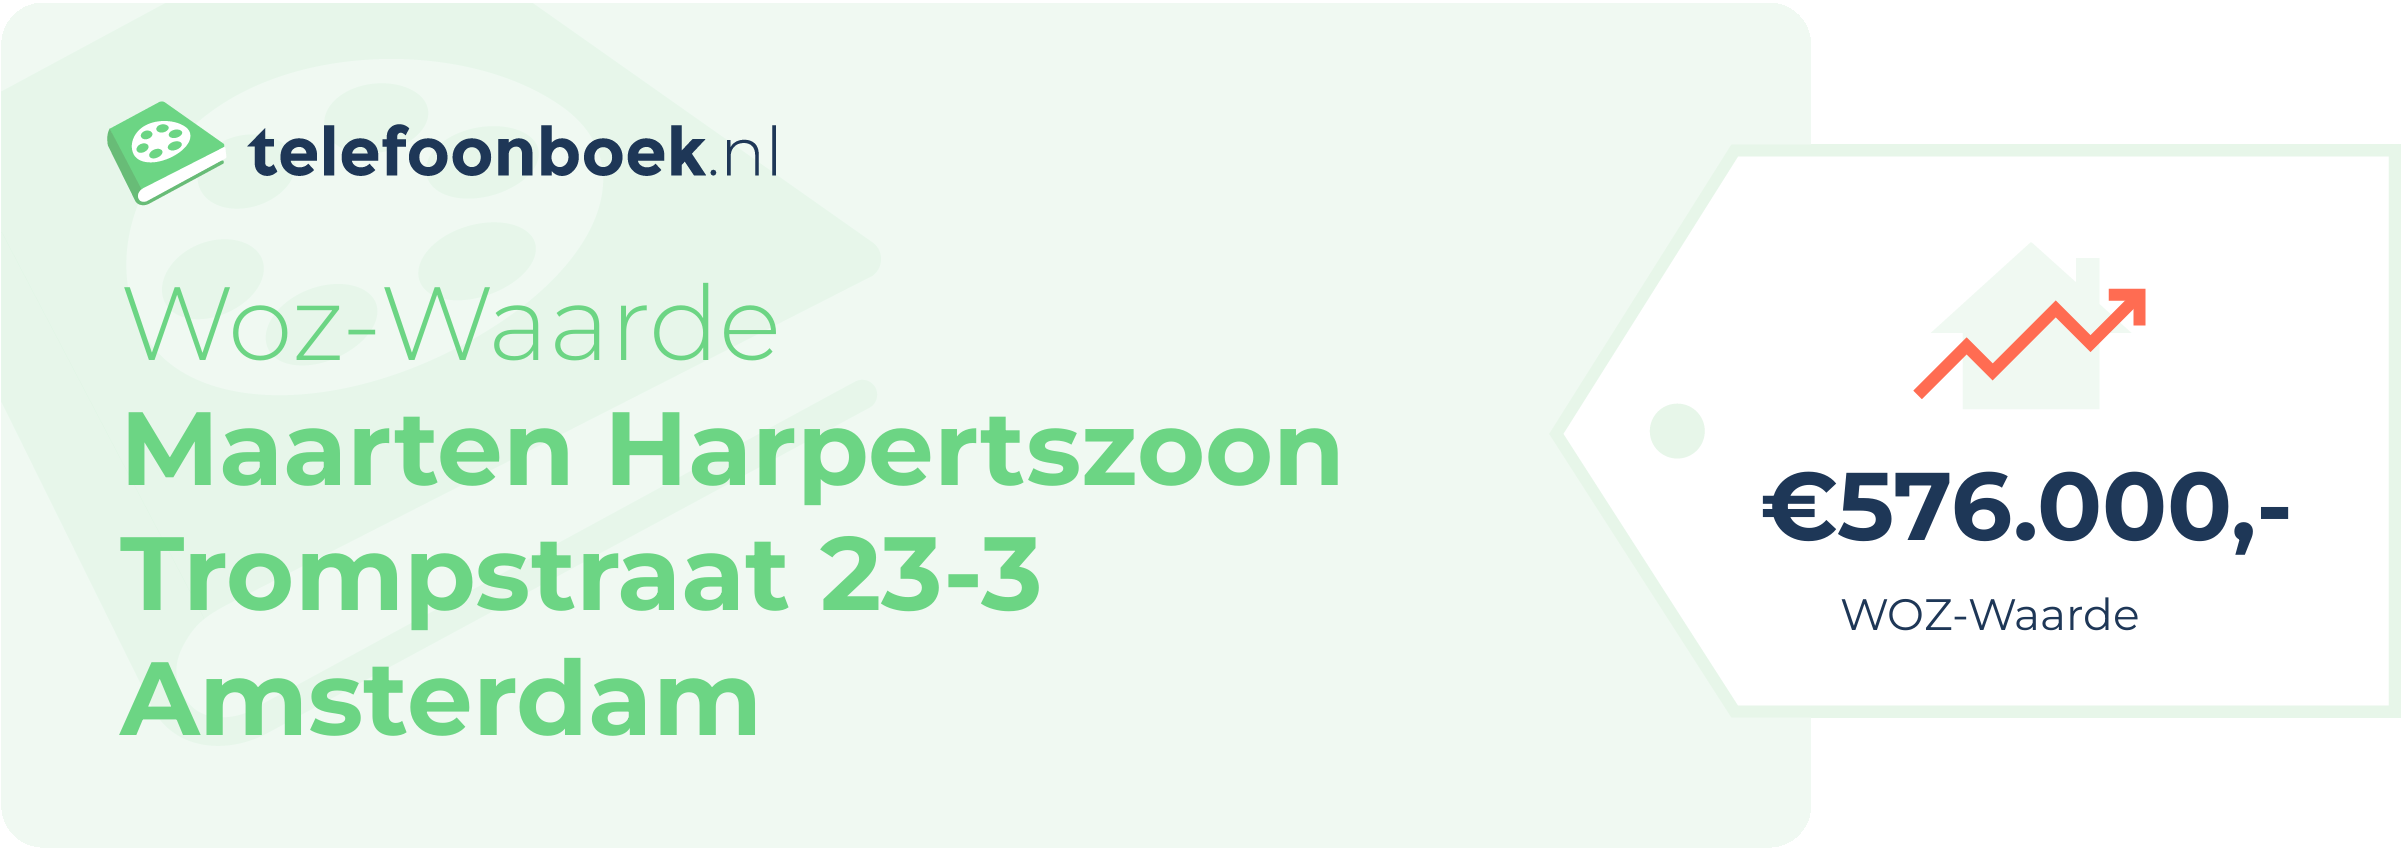 WOZ-waarde Maarten Harpertszoon Trompstraat 23-3 Amsterdam